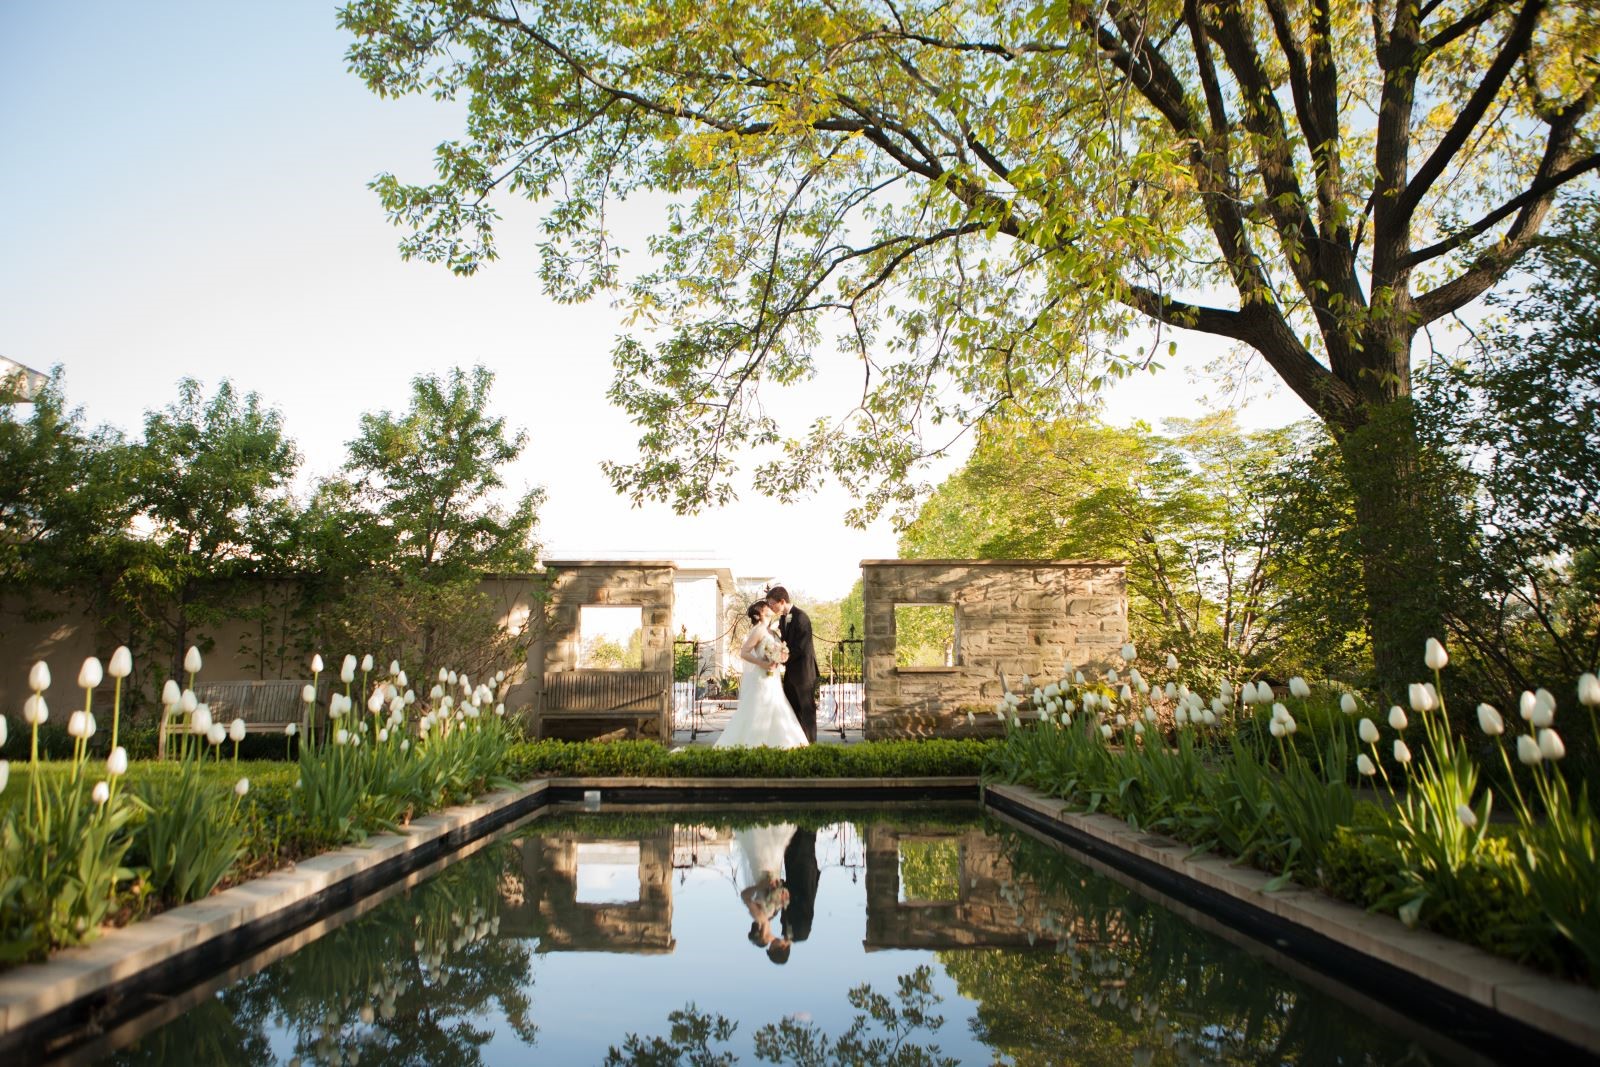 Destination wedding in Ohio at the Cleveland Botanical Garden Reflection Pool